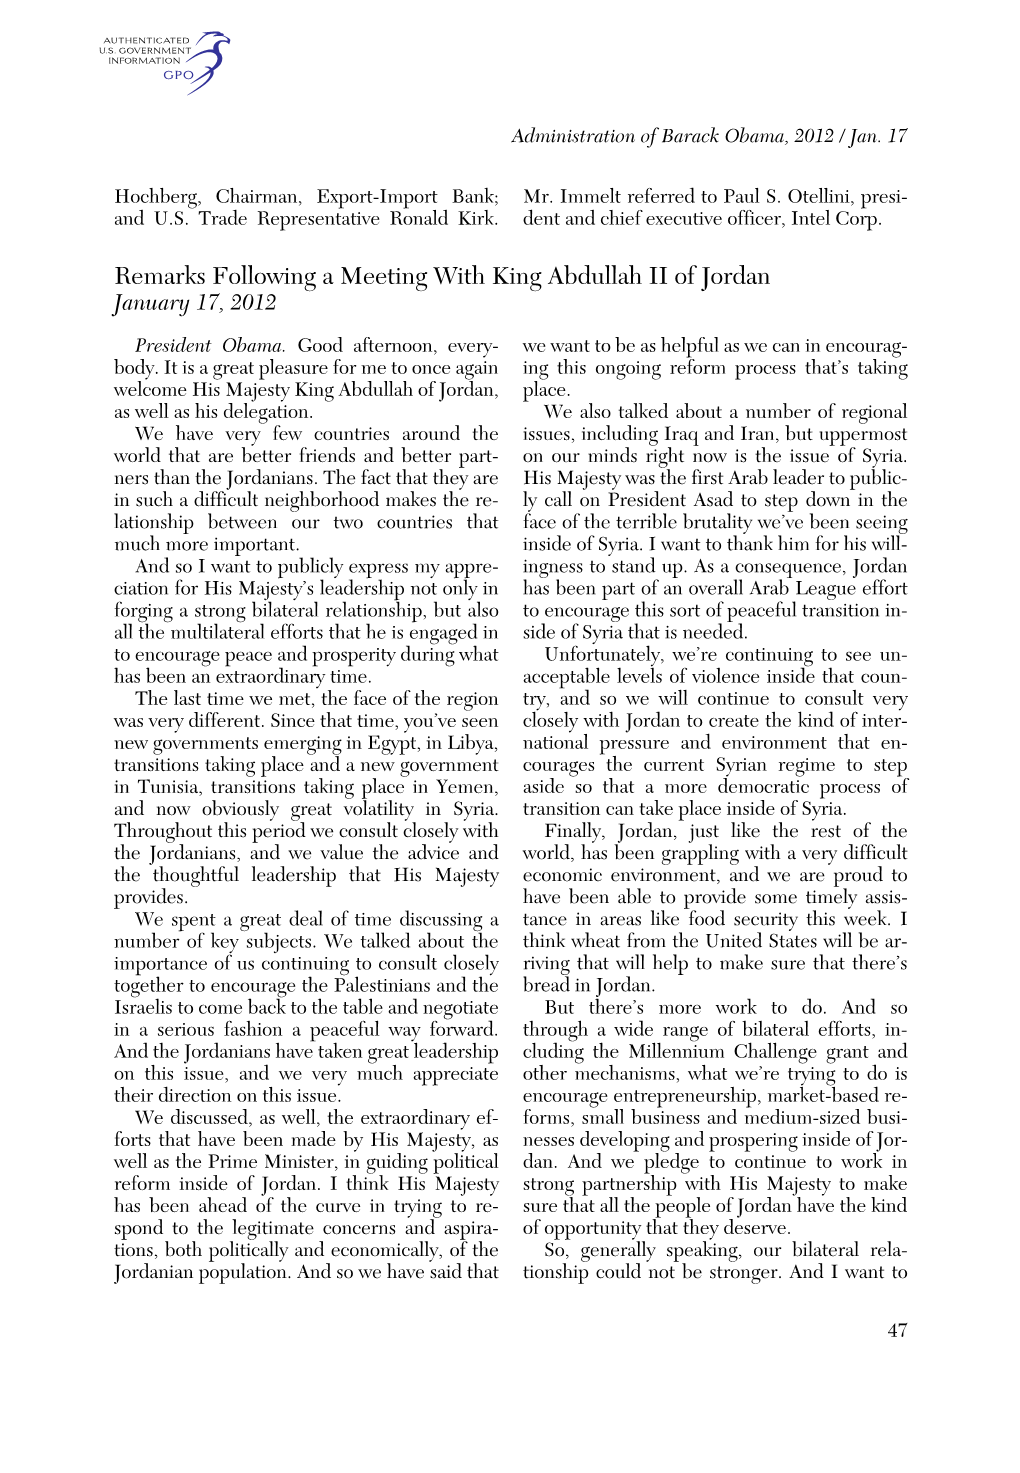 Remarks Following a Meeting with King Abdullah II of Jordan January 17, 2012